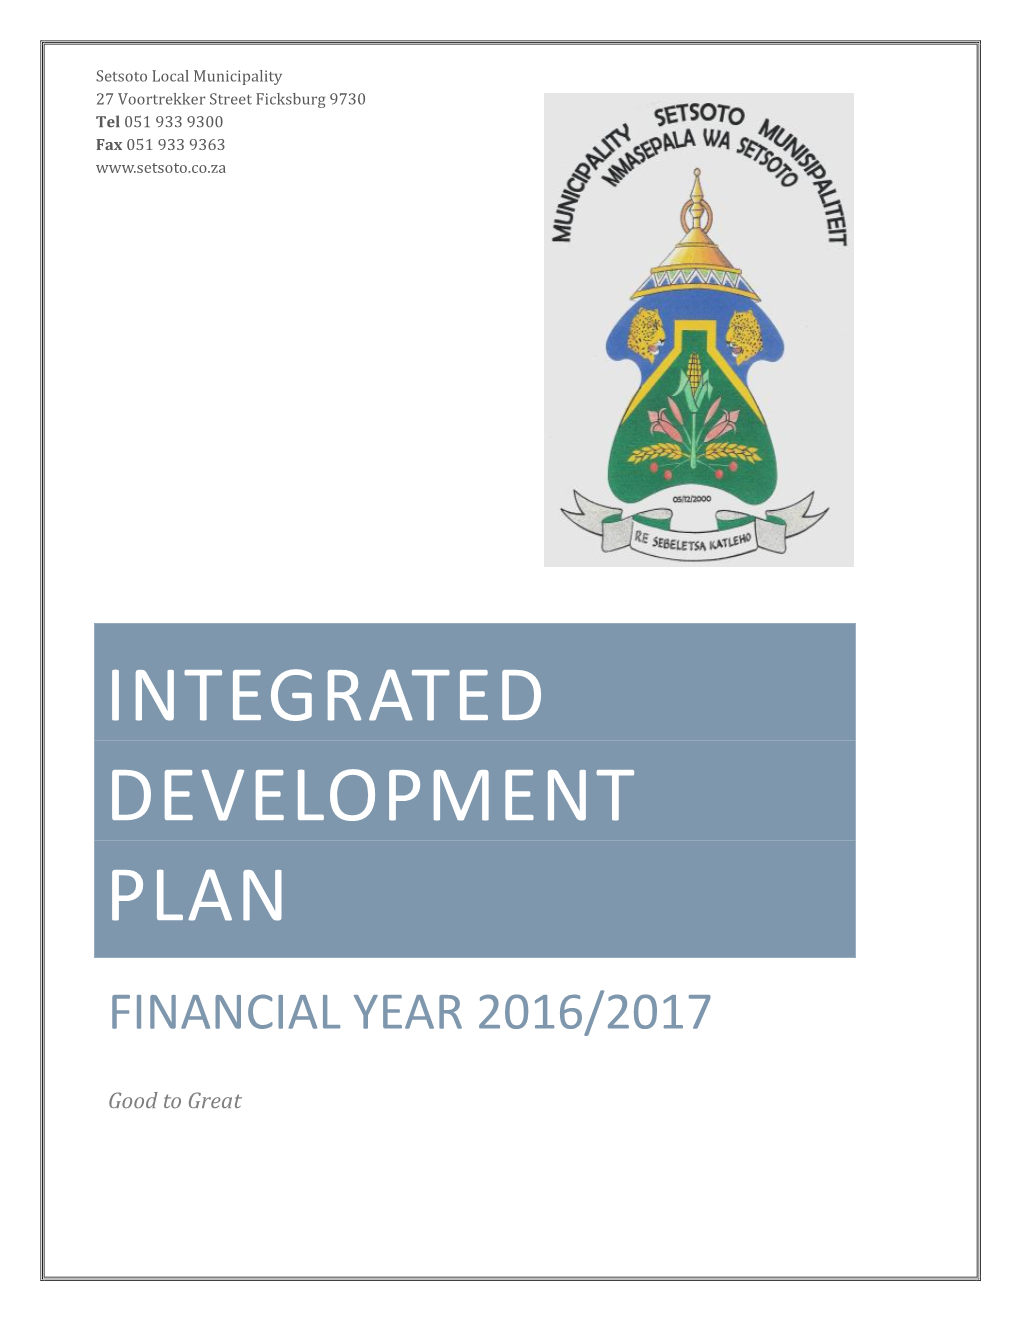 Integrated Development Plan Financial Year 2016/2017